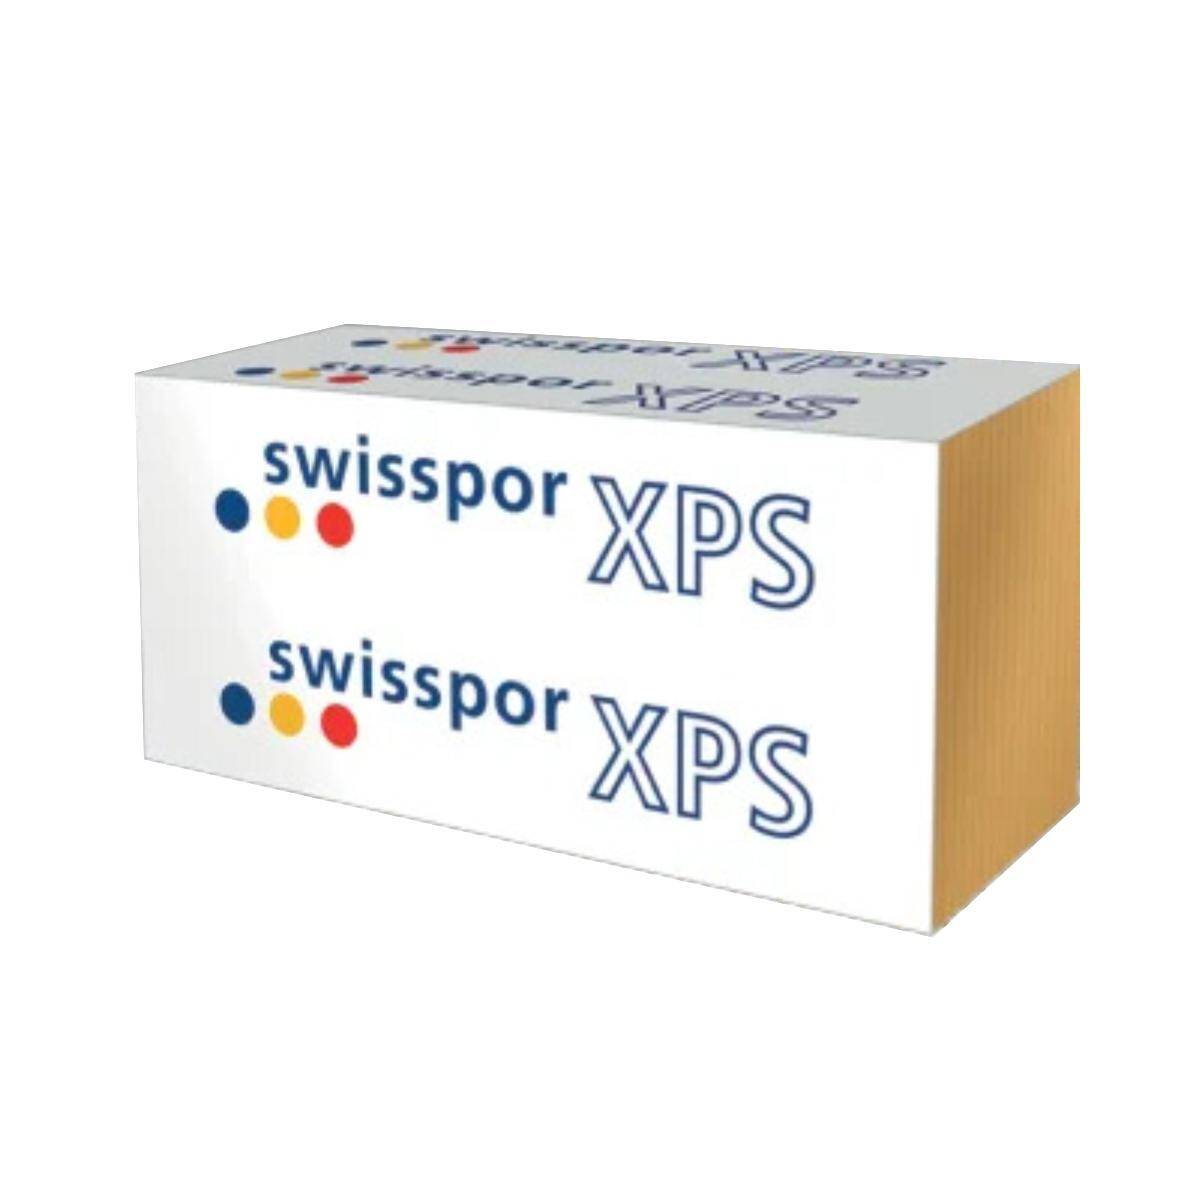 Styrodur XPS Swisspor